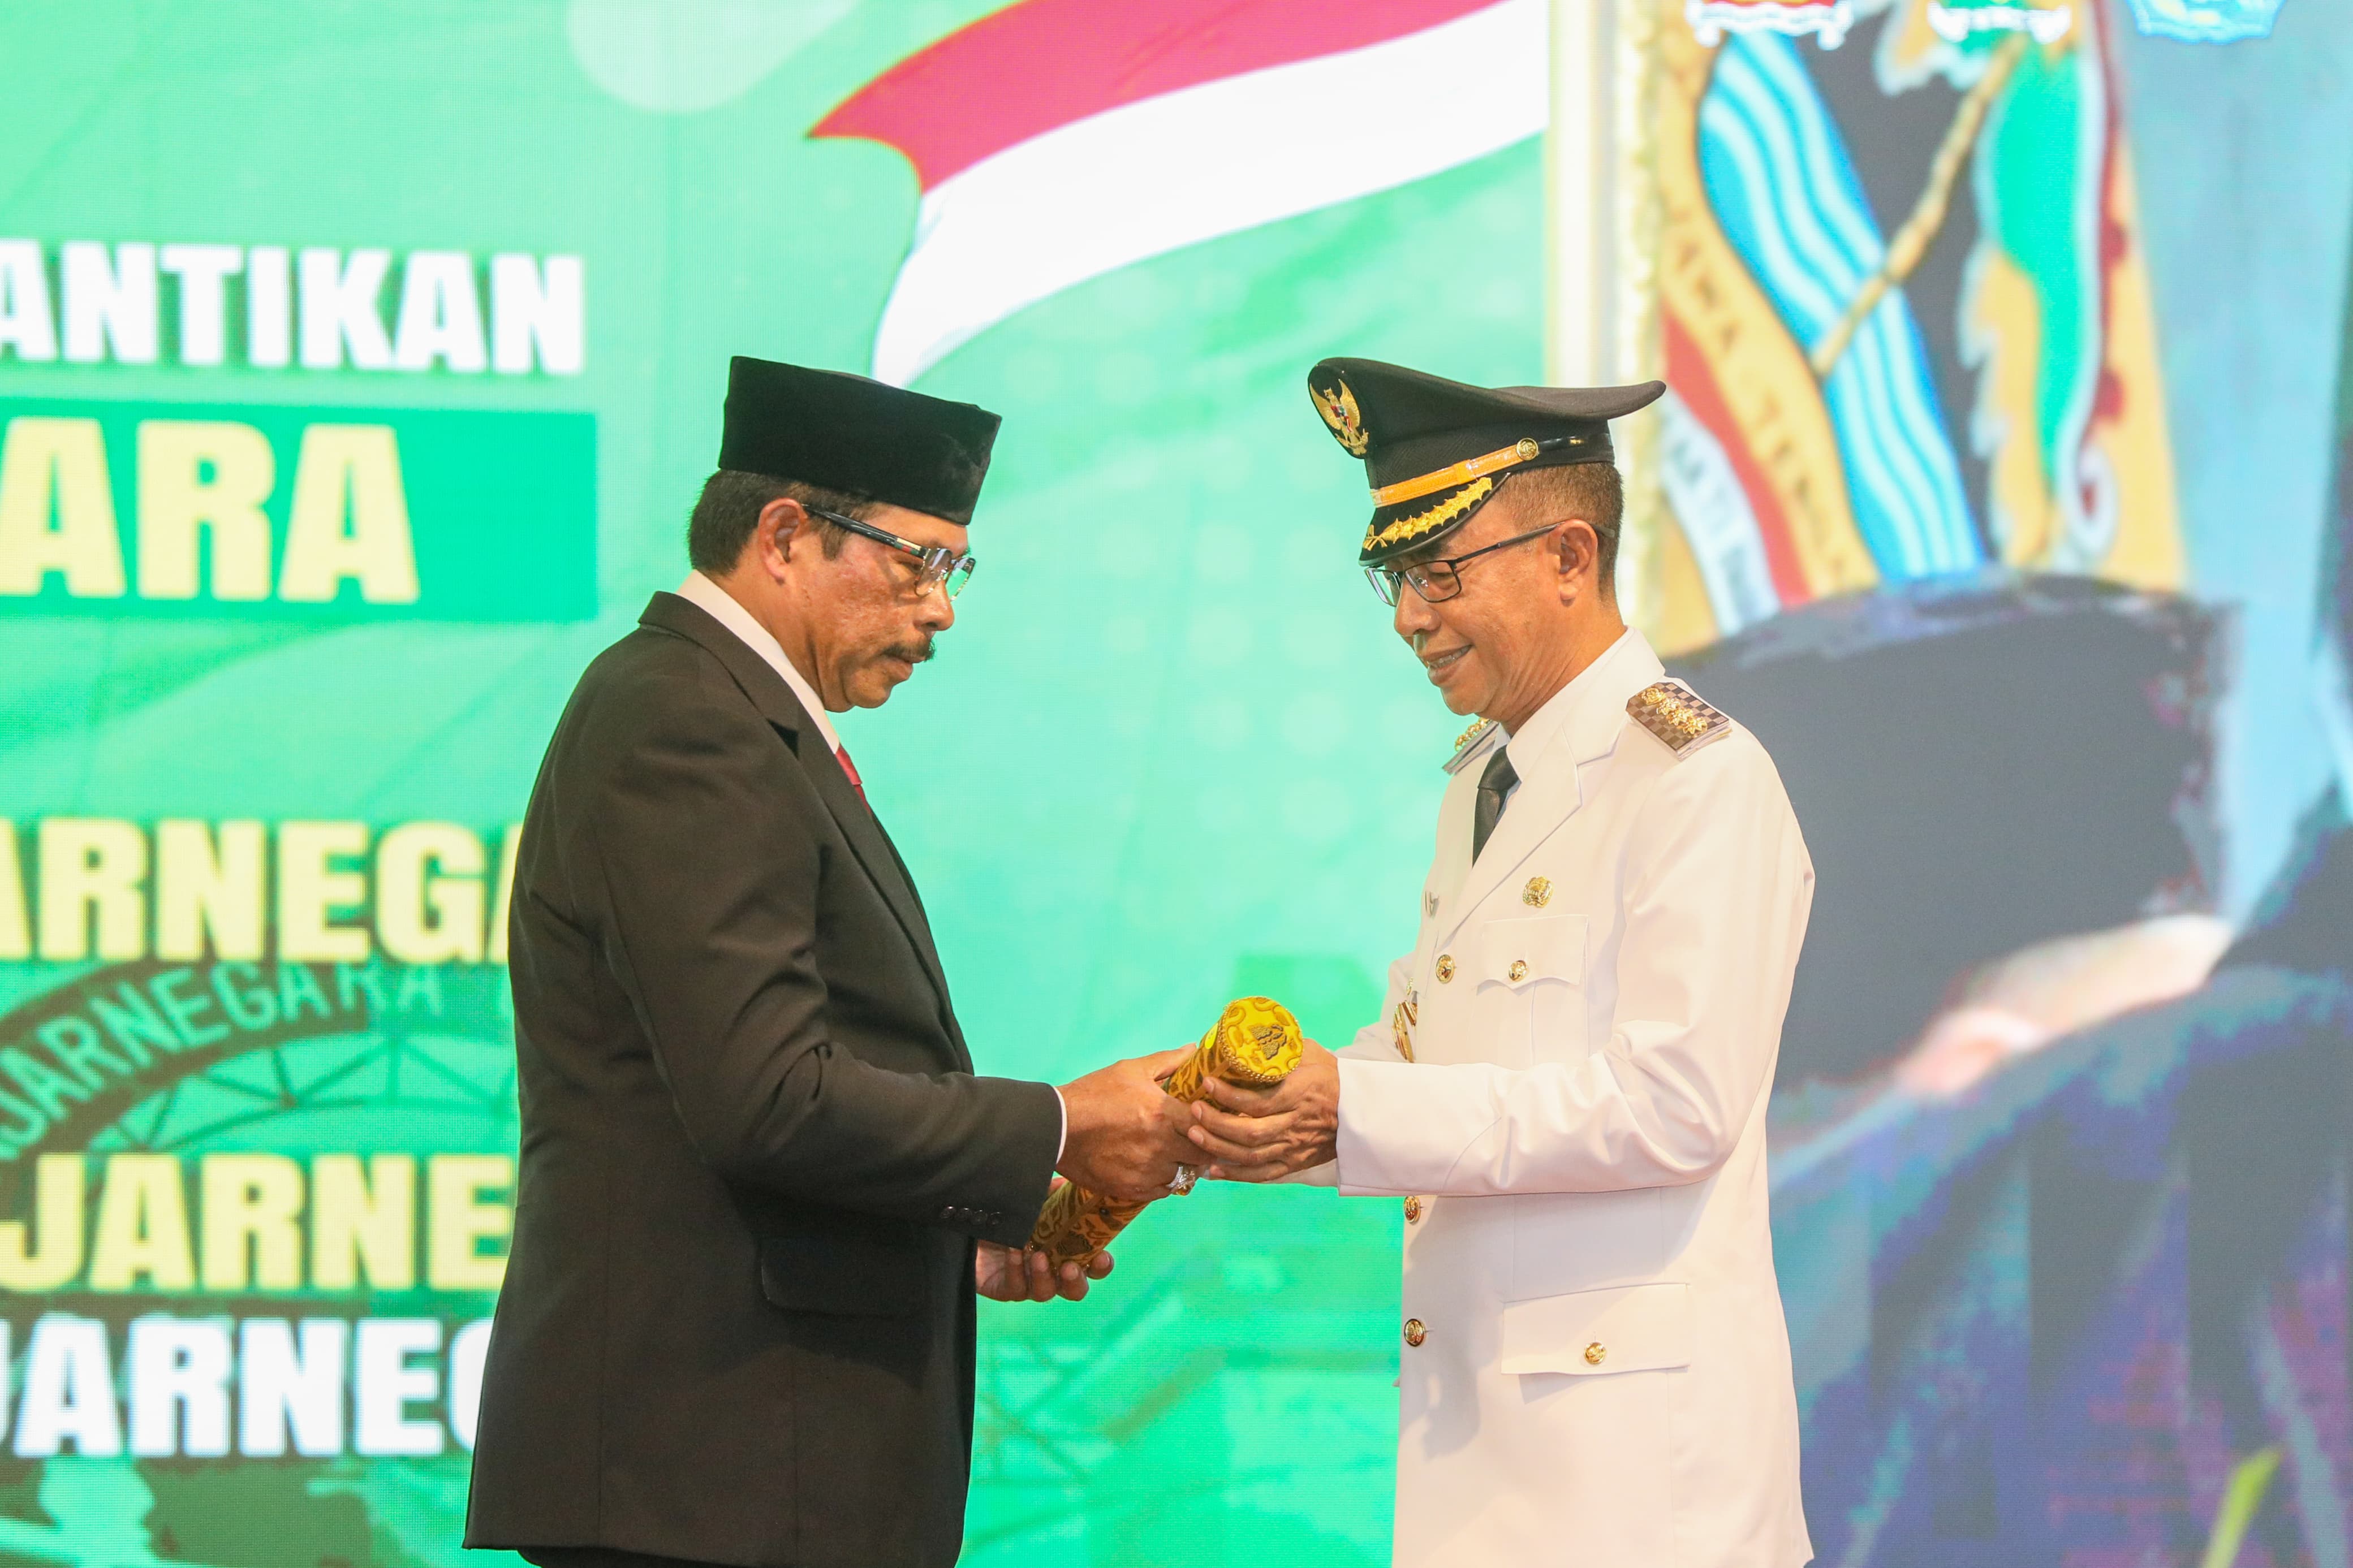 Dituntut Lebih Inovatif, Pj Gubernur Jateng Lantik Muhammad Masrofi Jadi Pj Bupati Banjarnegara